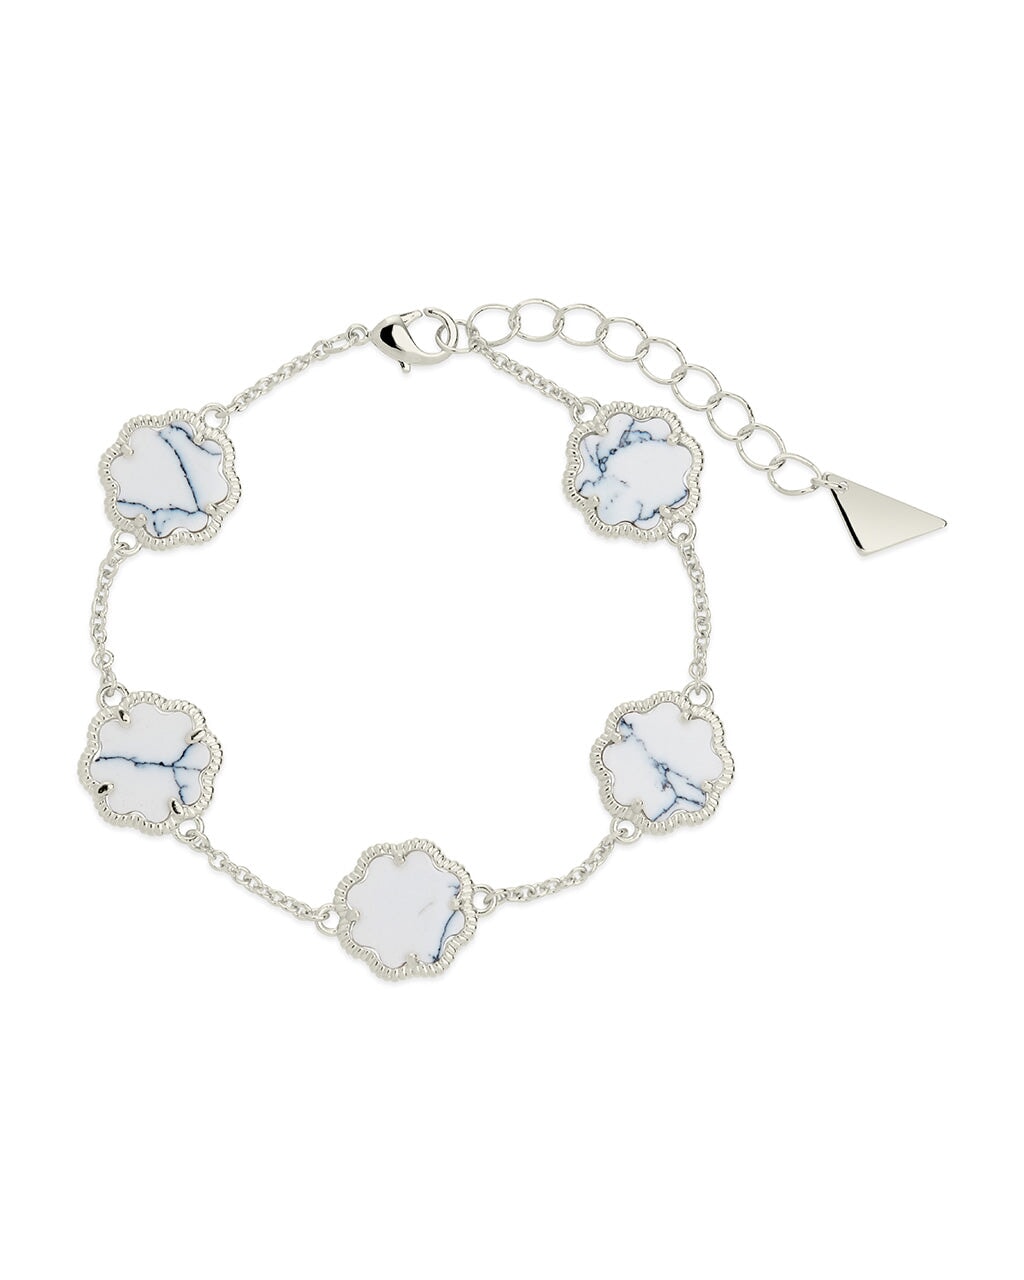 Rose Petal Station Bracelet Bracelet Sterling Forever Silver White Turquoise 